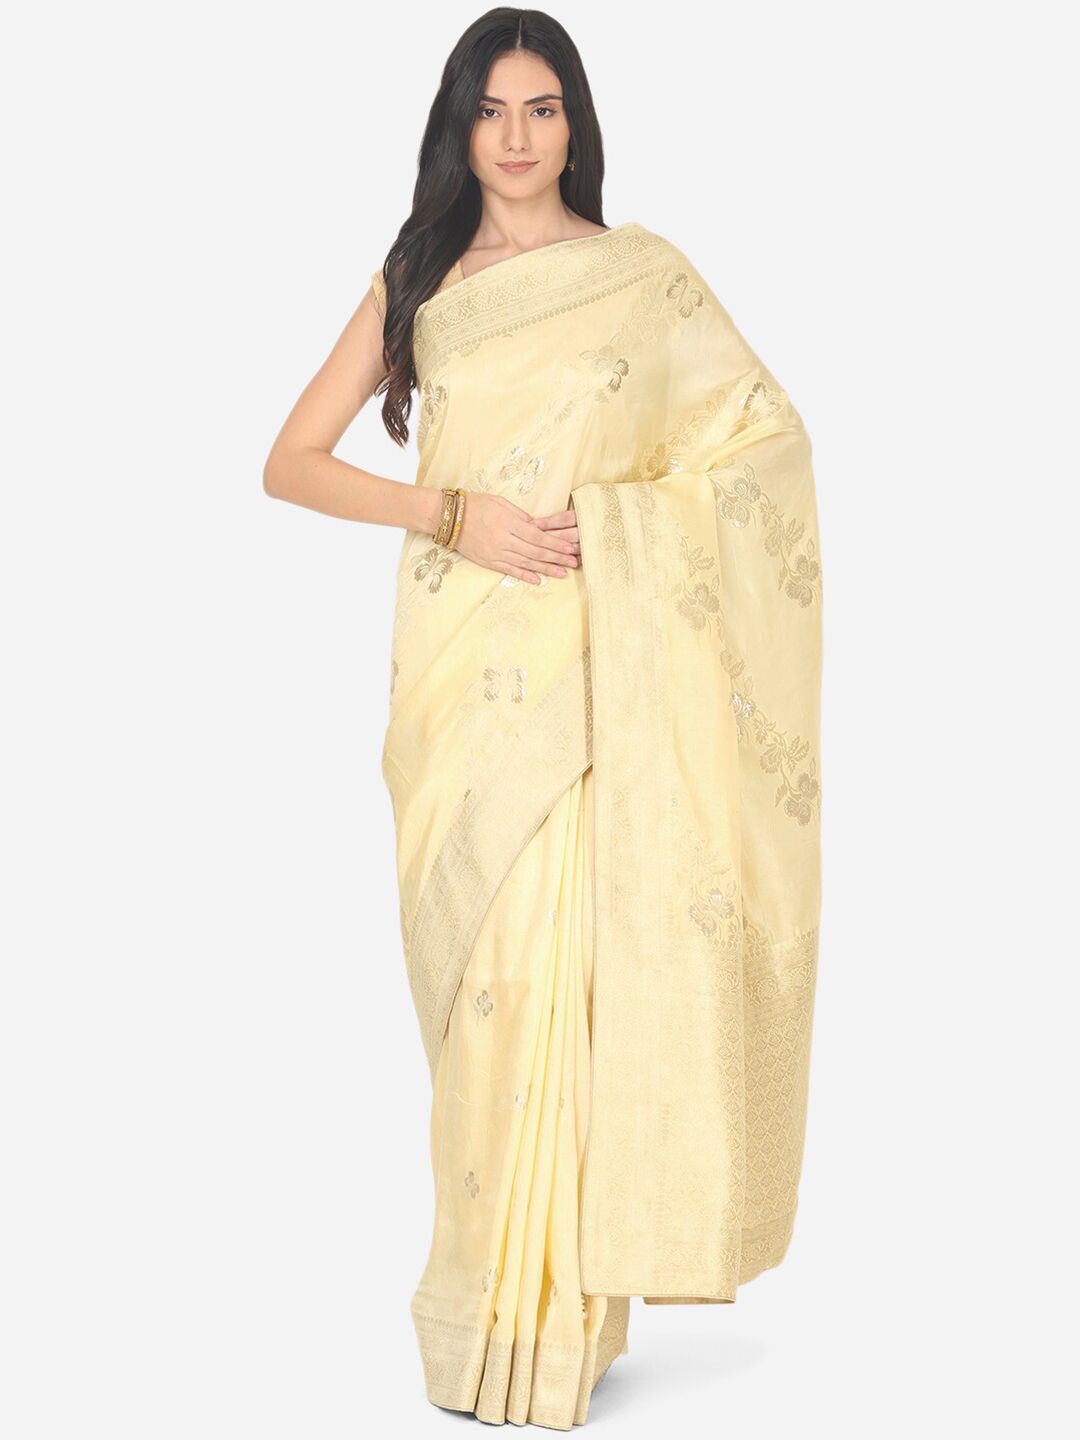 BOMBAY SELECTIONS Cream-Coloured & Gold Ethnic Motifs Zari Satin Banarasi Saree Price in India